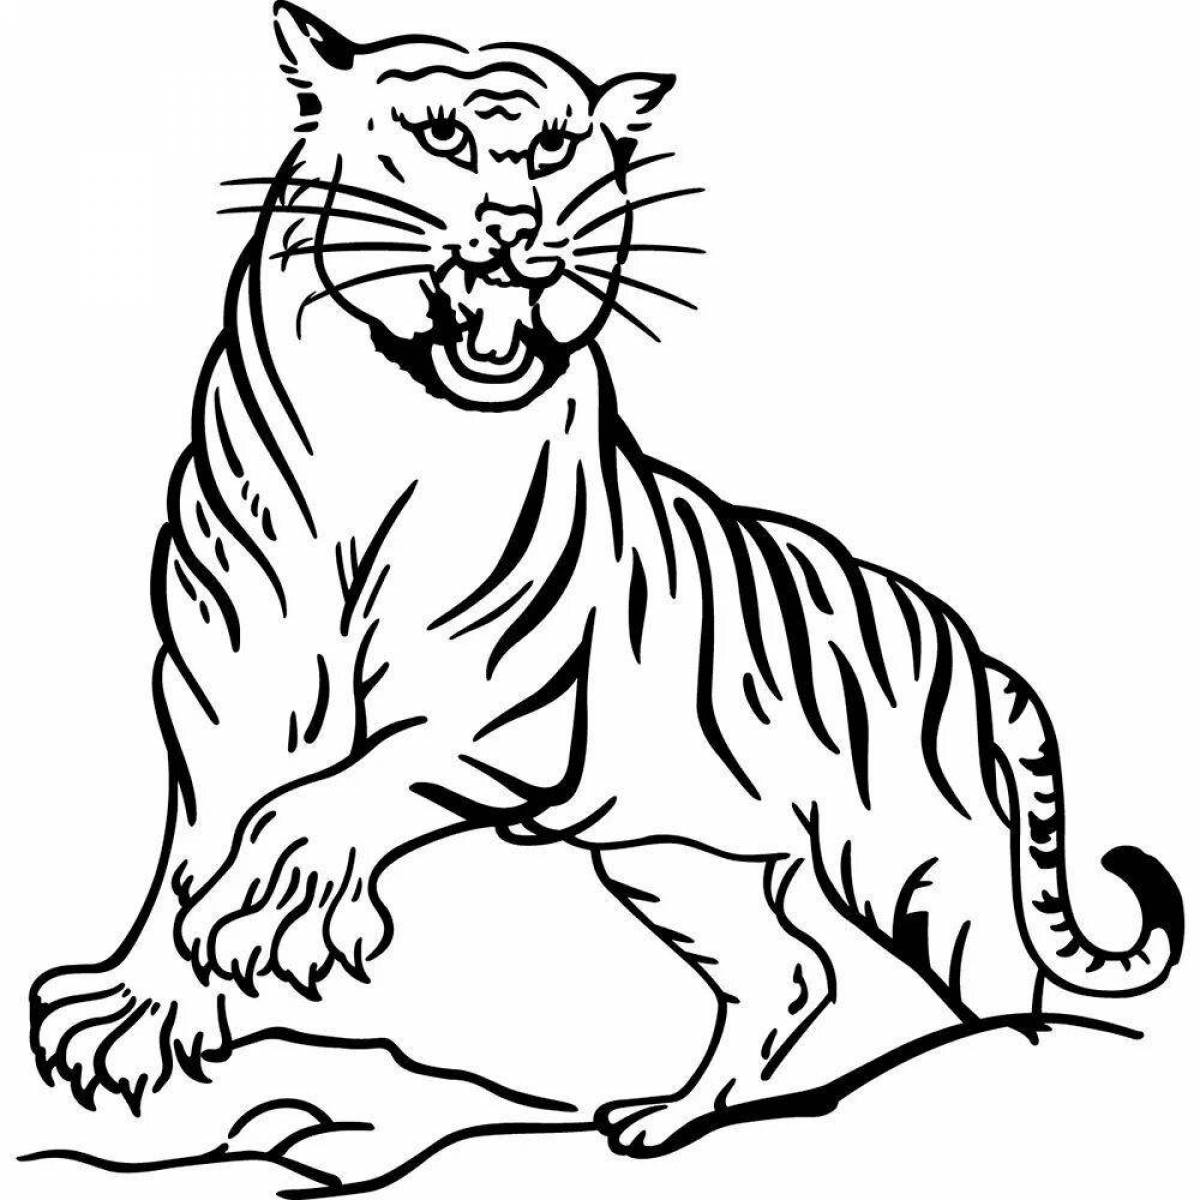 Fun tiger coloring book